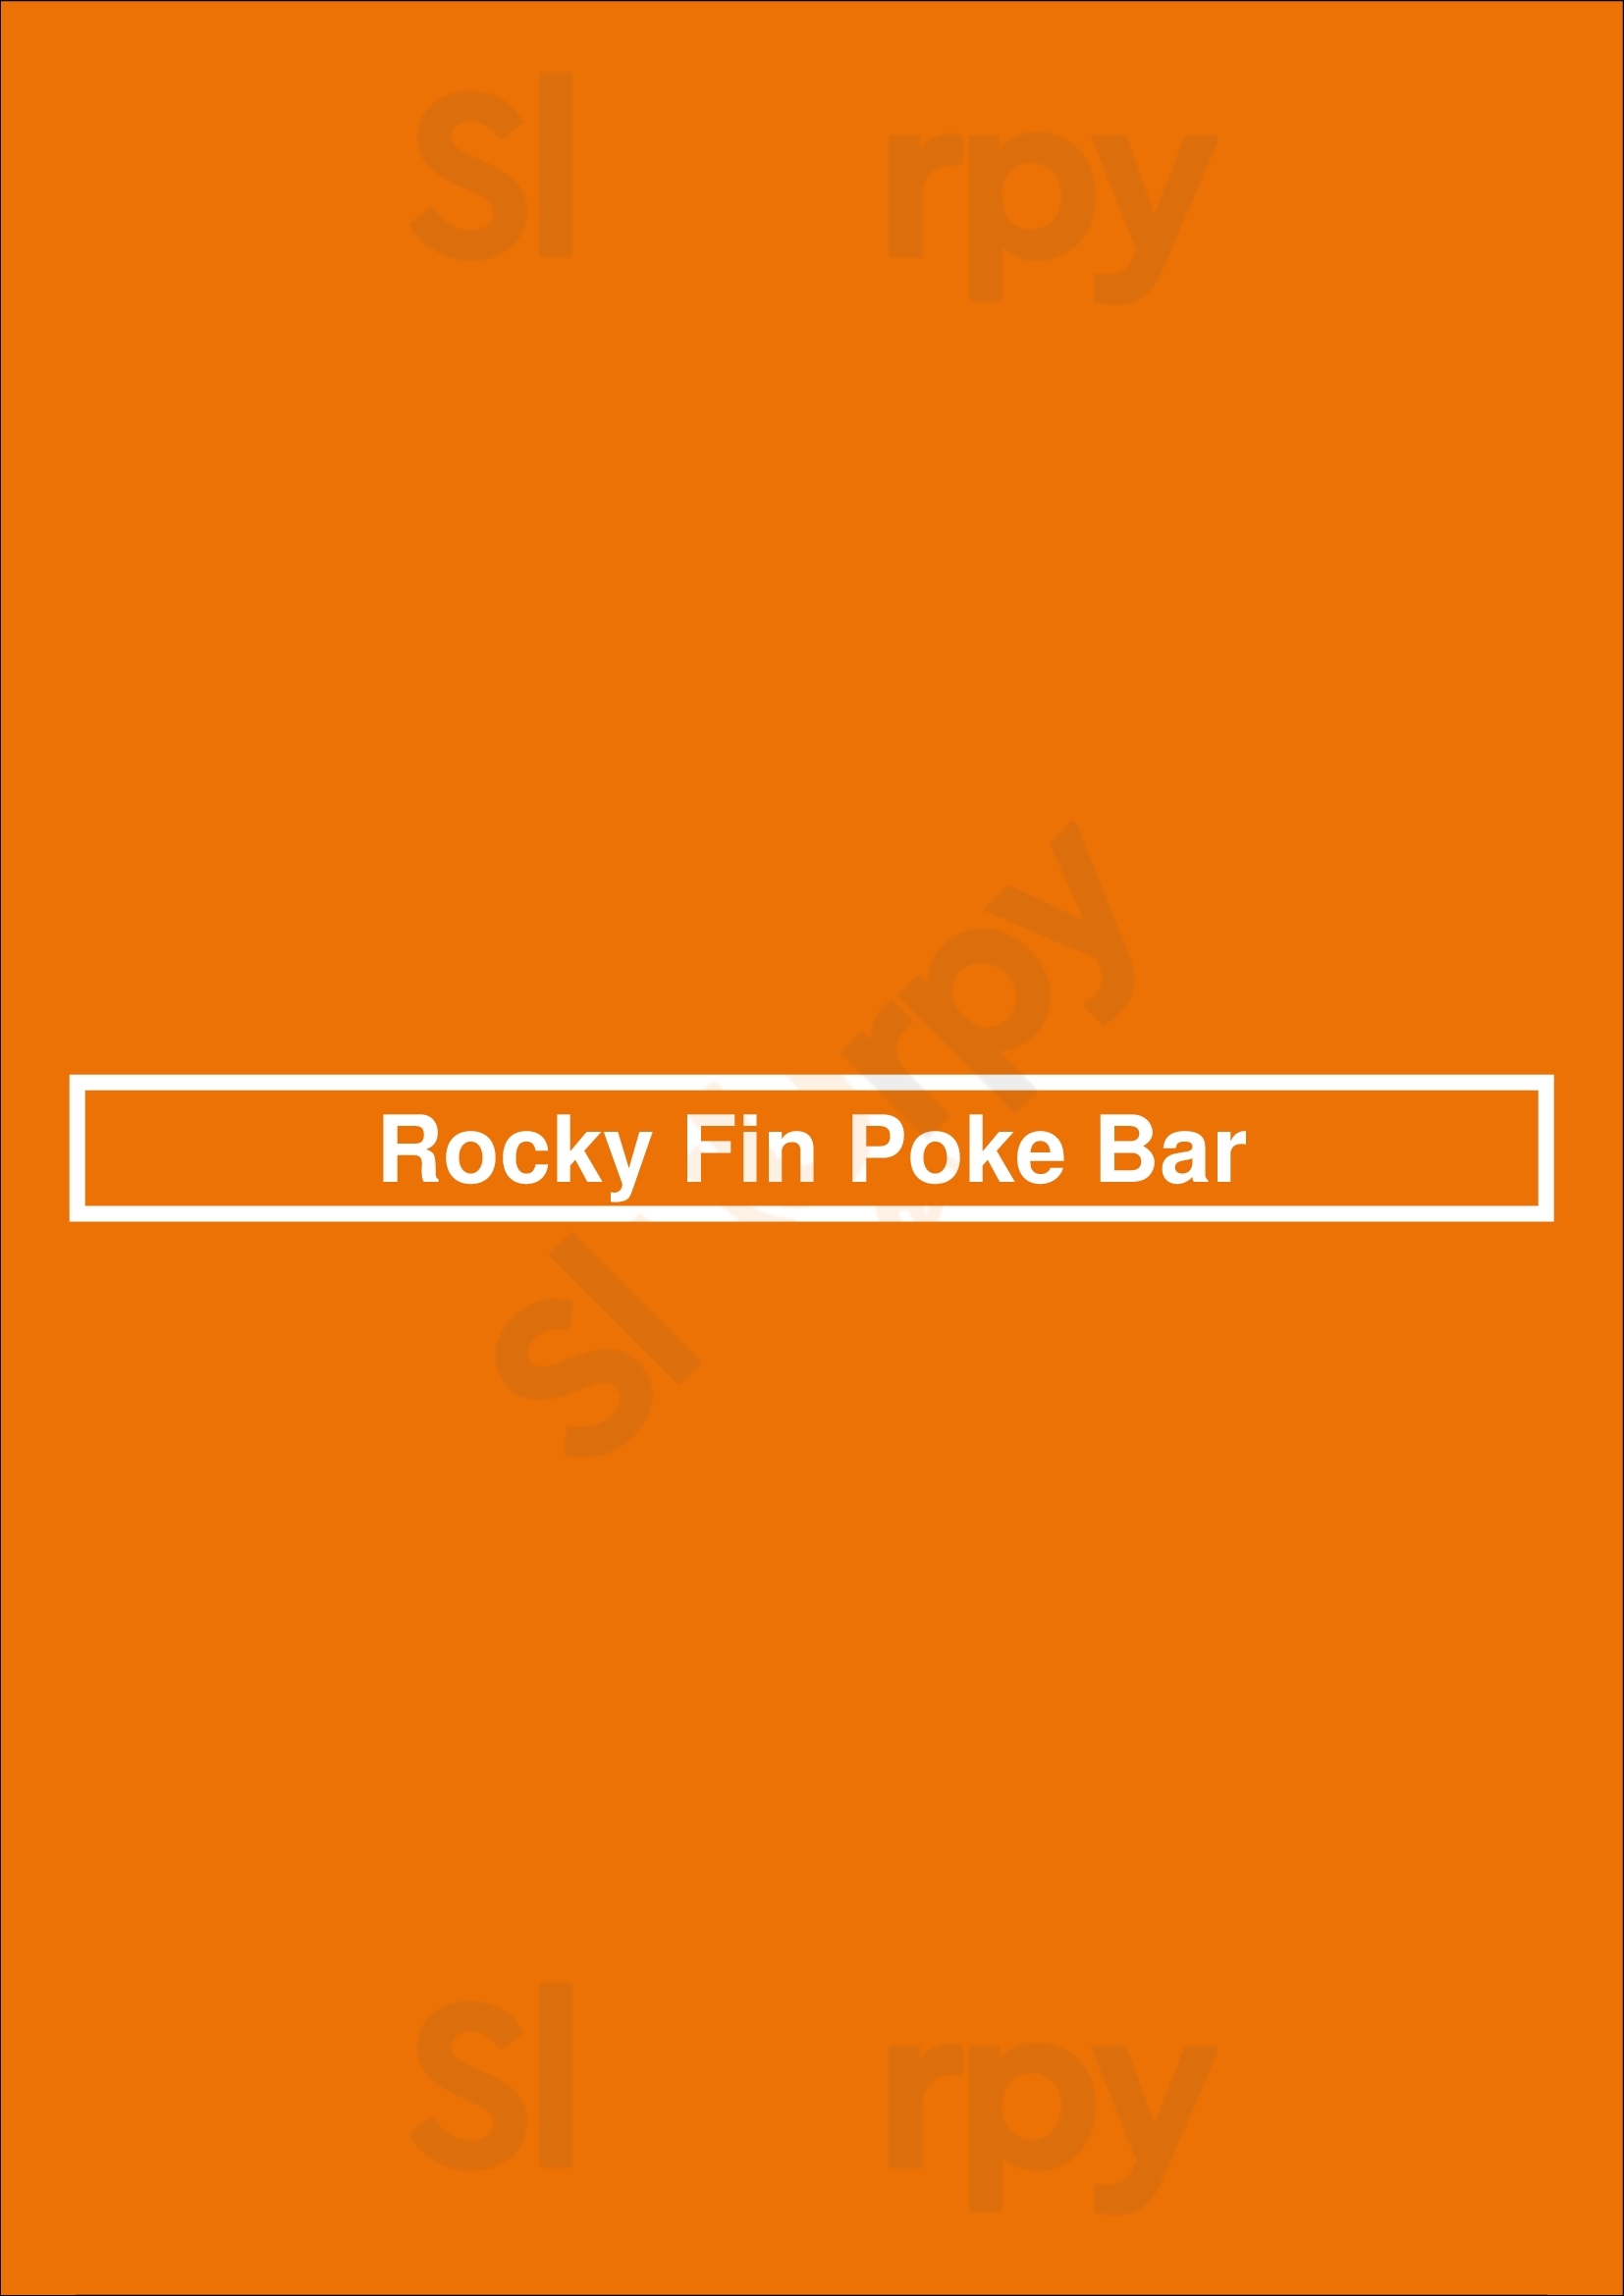 Rocky Fin Poke Bar Denver Menu - 1